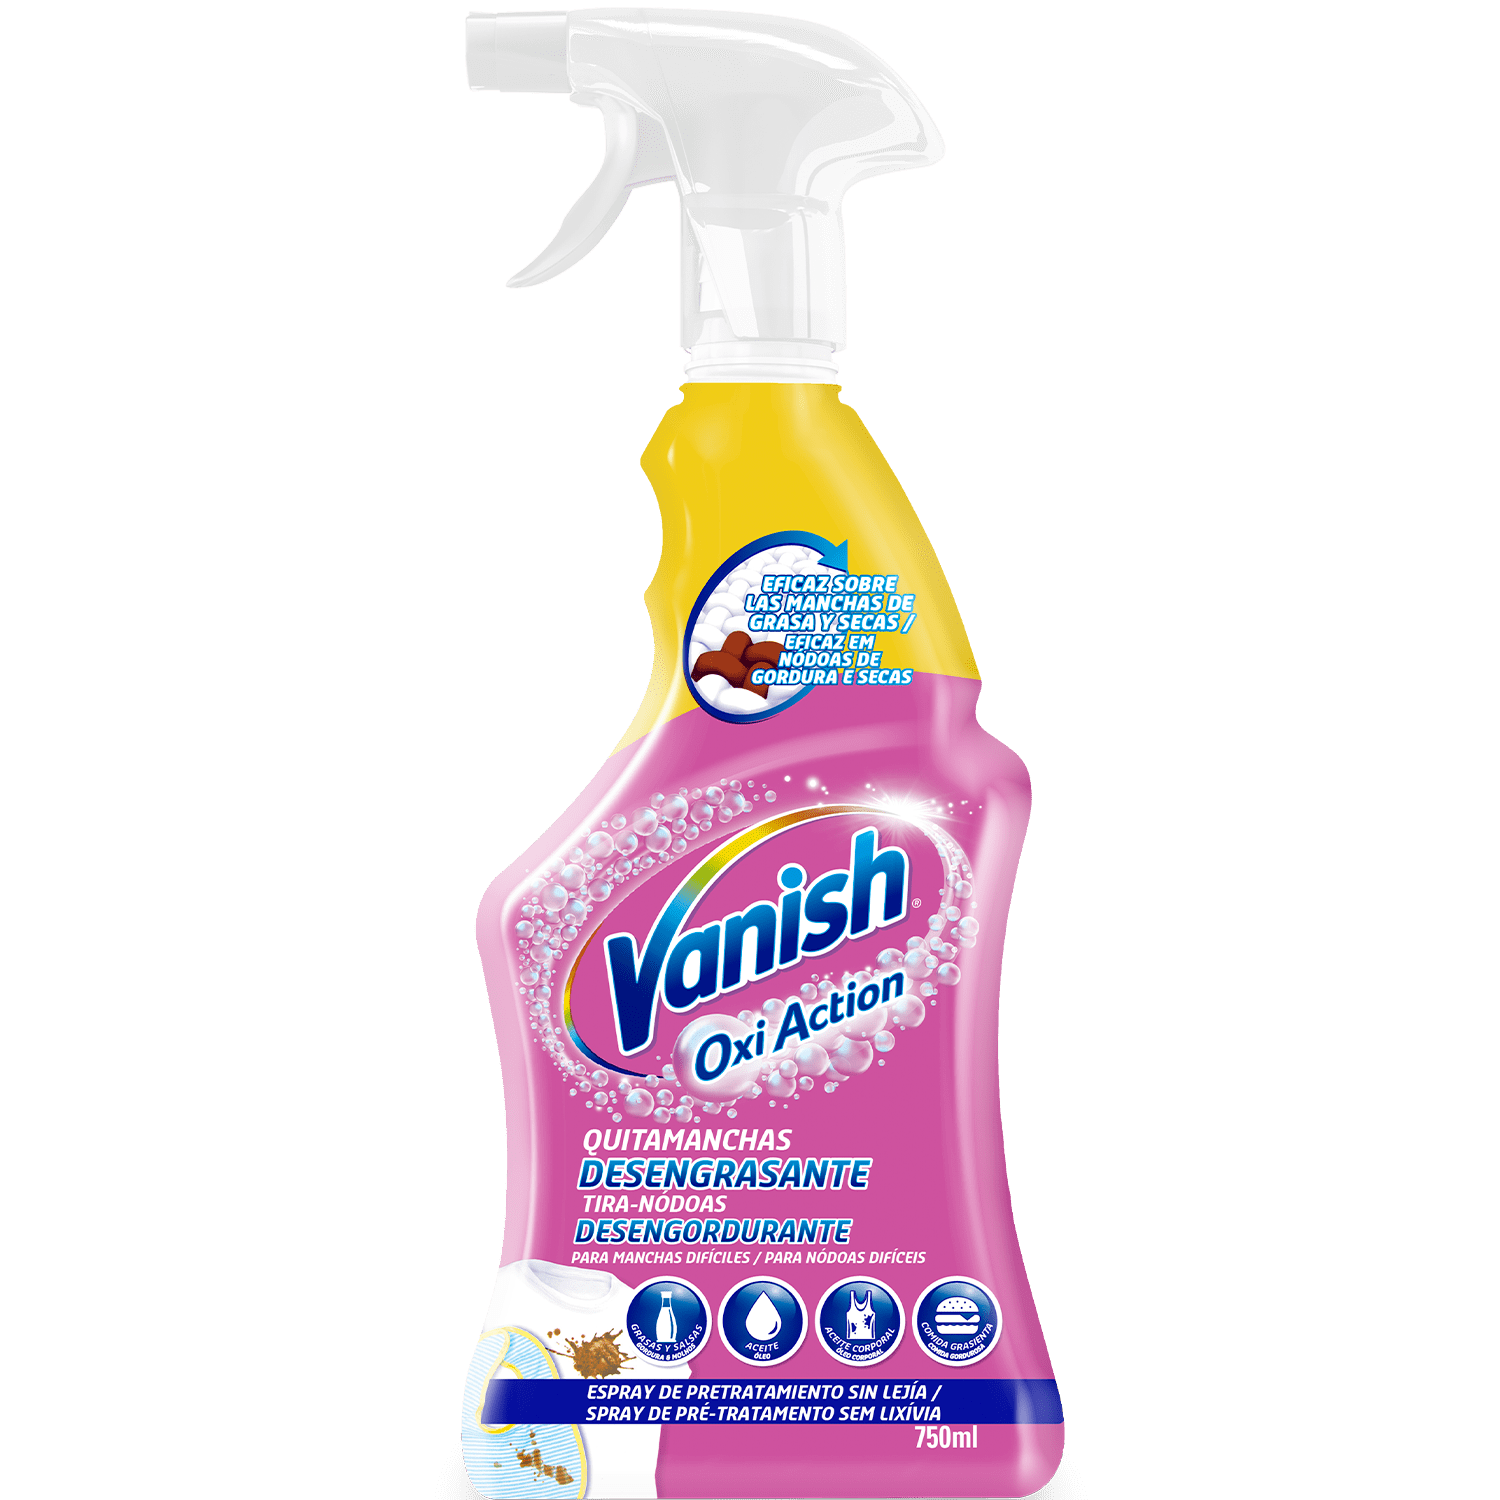 Vanish Oxi Action spray desengrasante